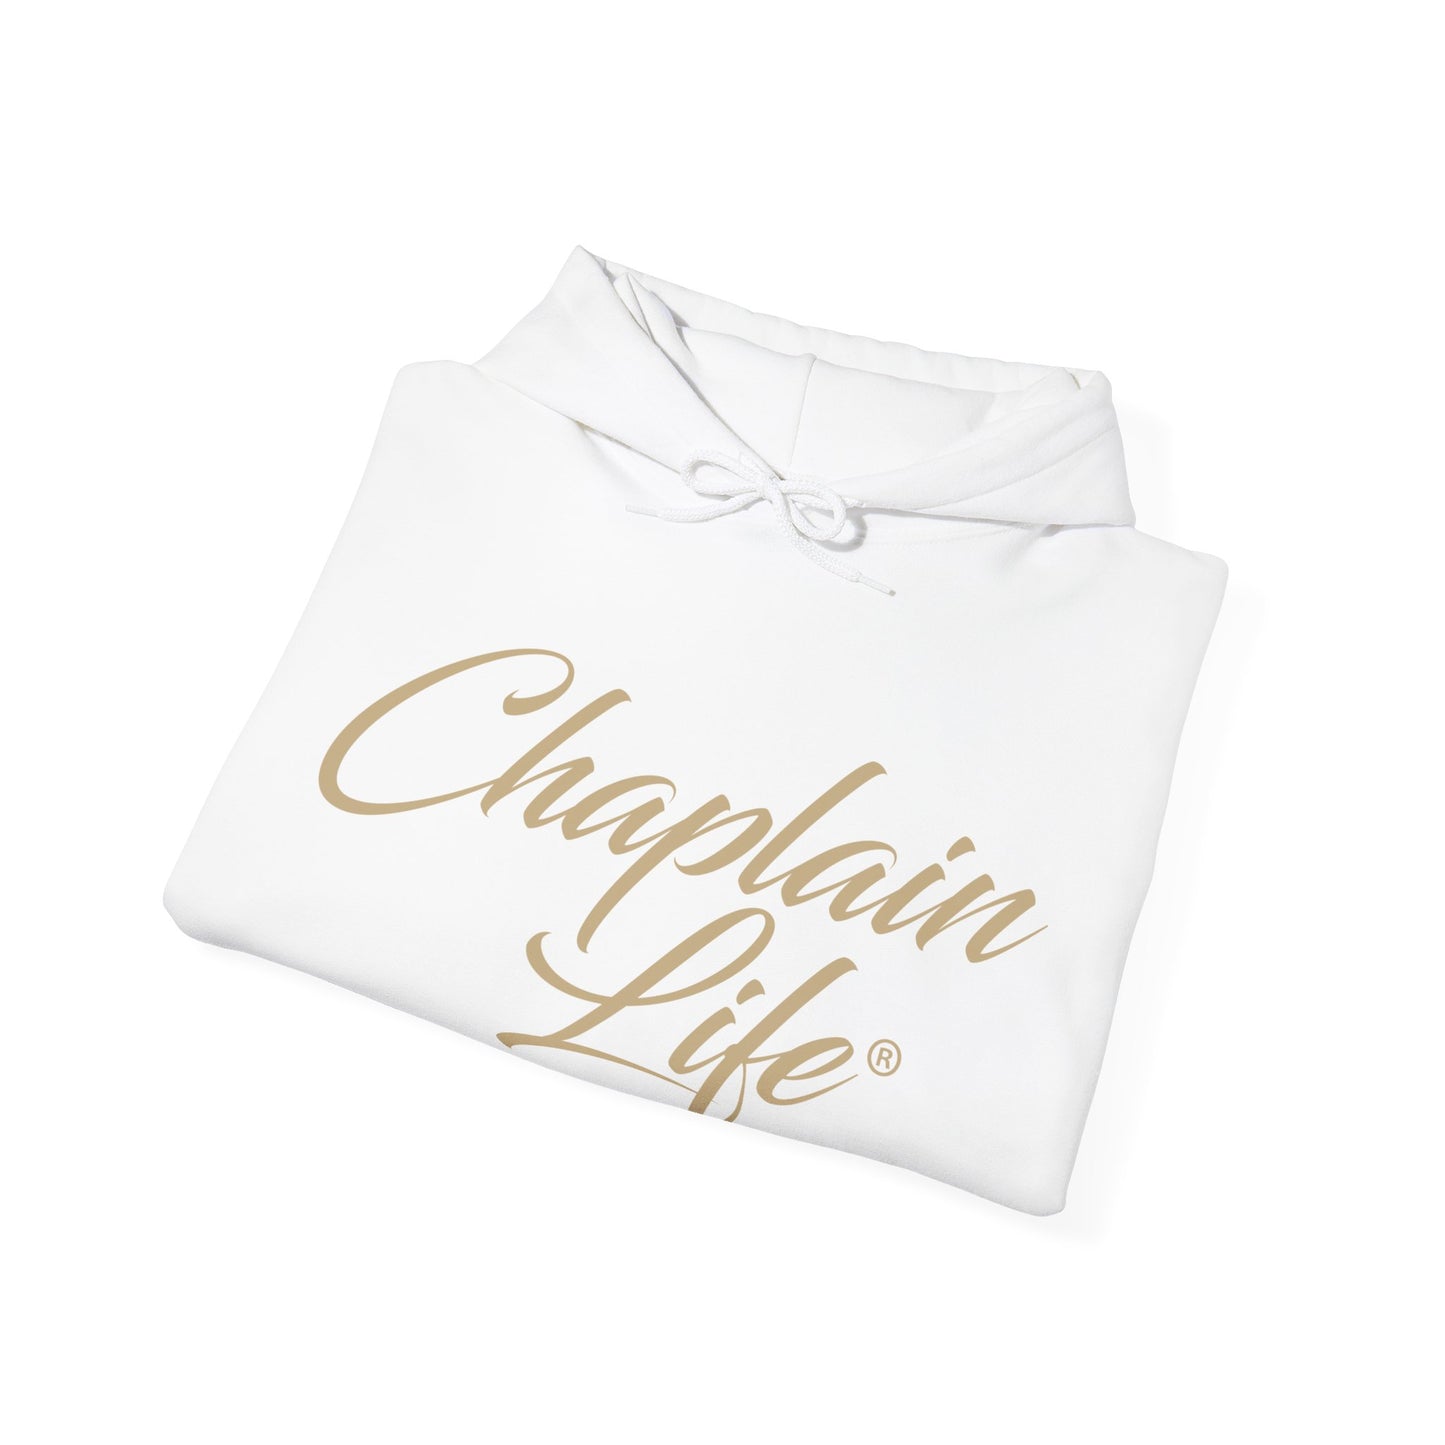 The Hooded Sweatshirt by Chaplain Life®